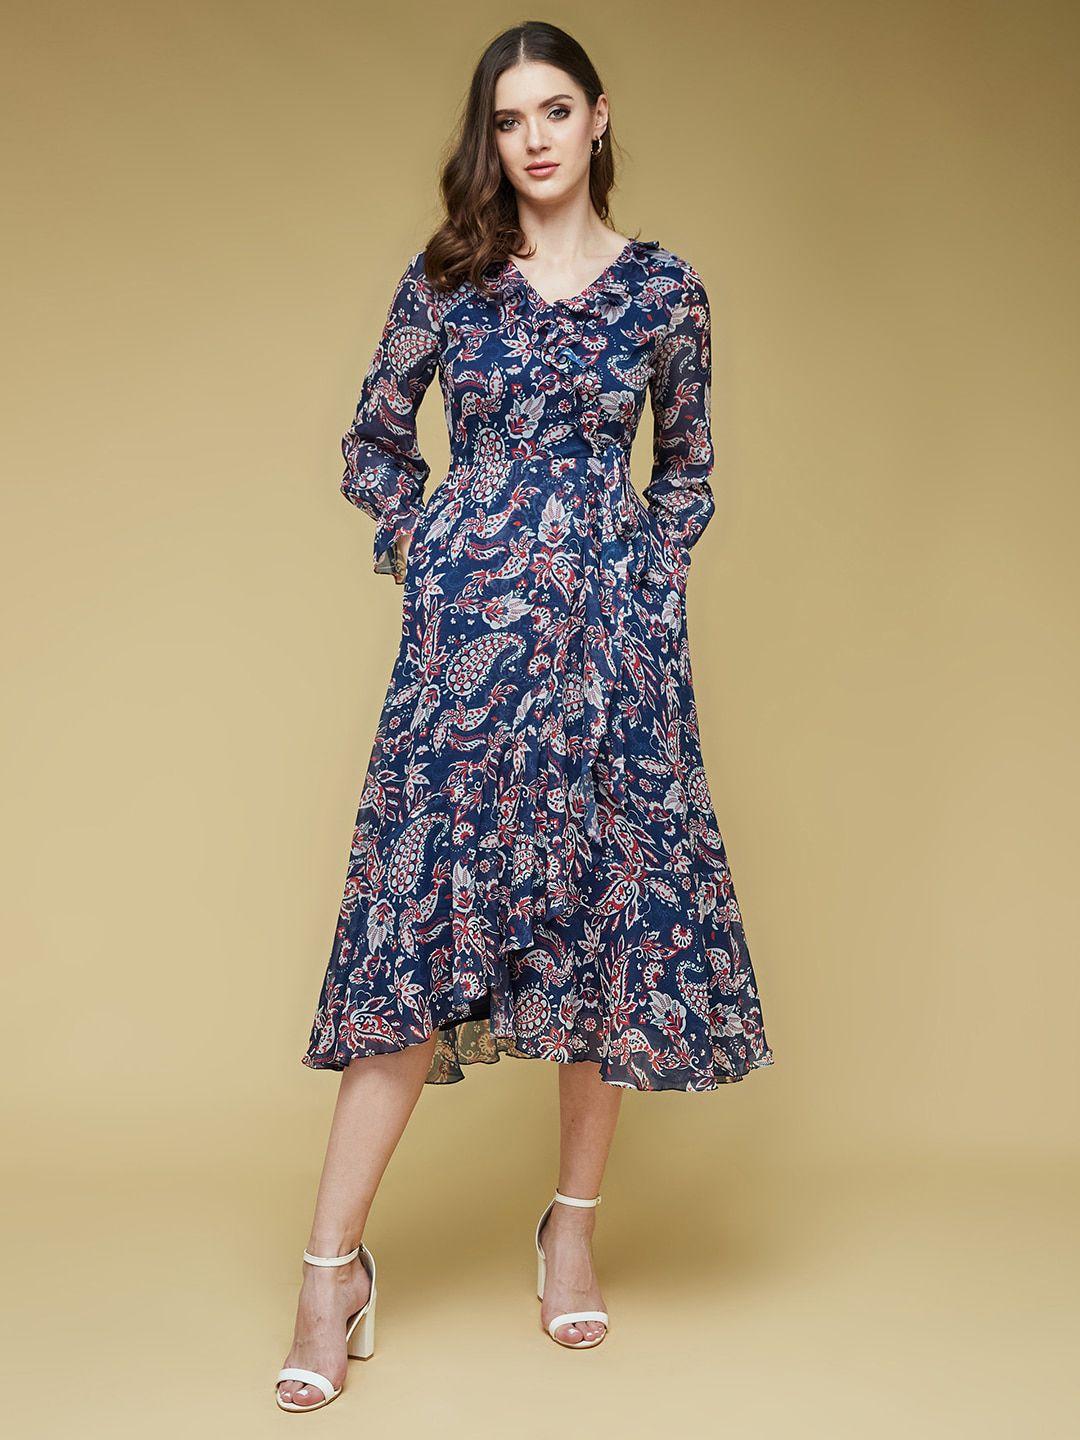 dressberry navy blue floral printed v-neck ruffles detail wrap dress